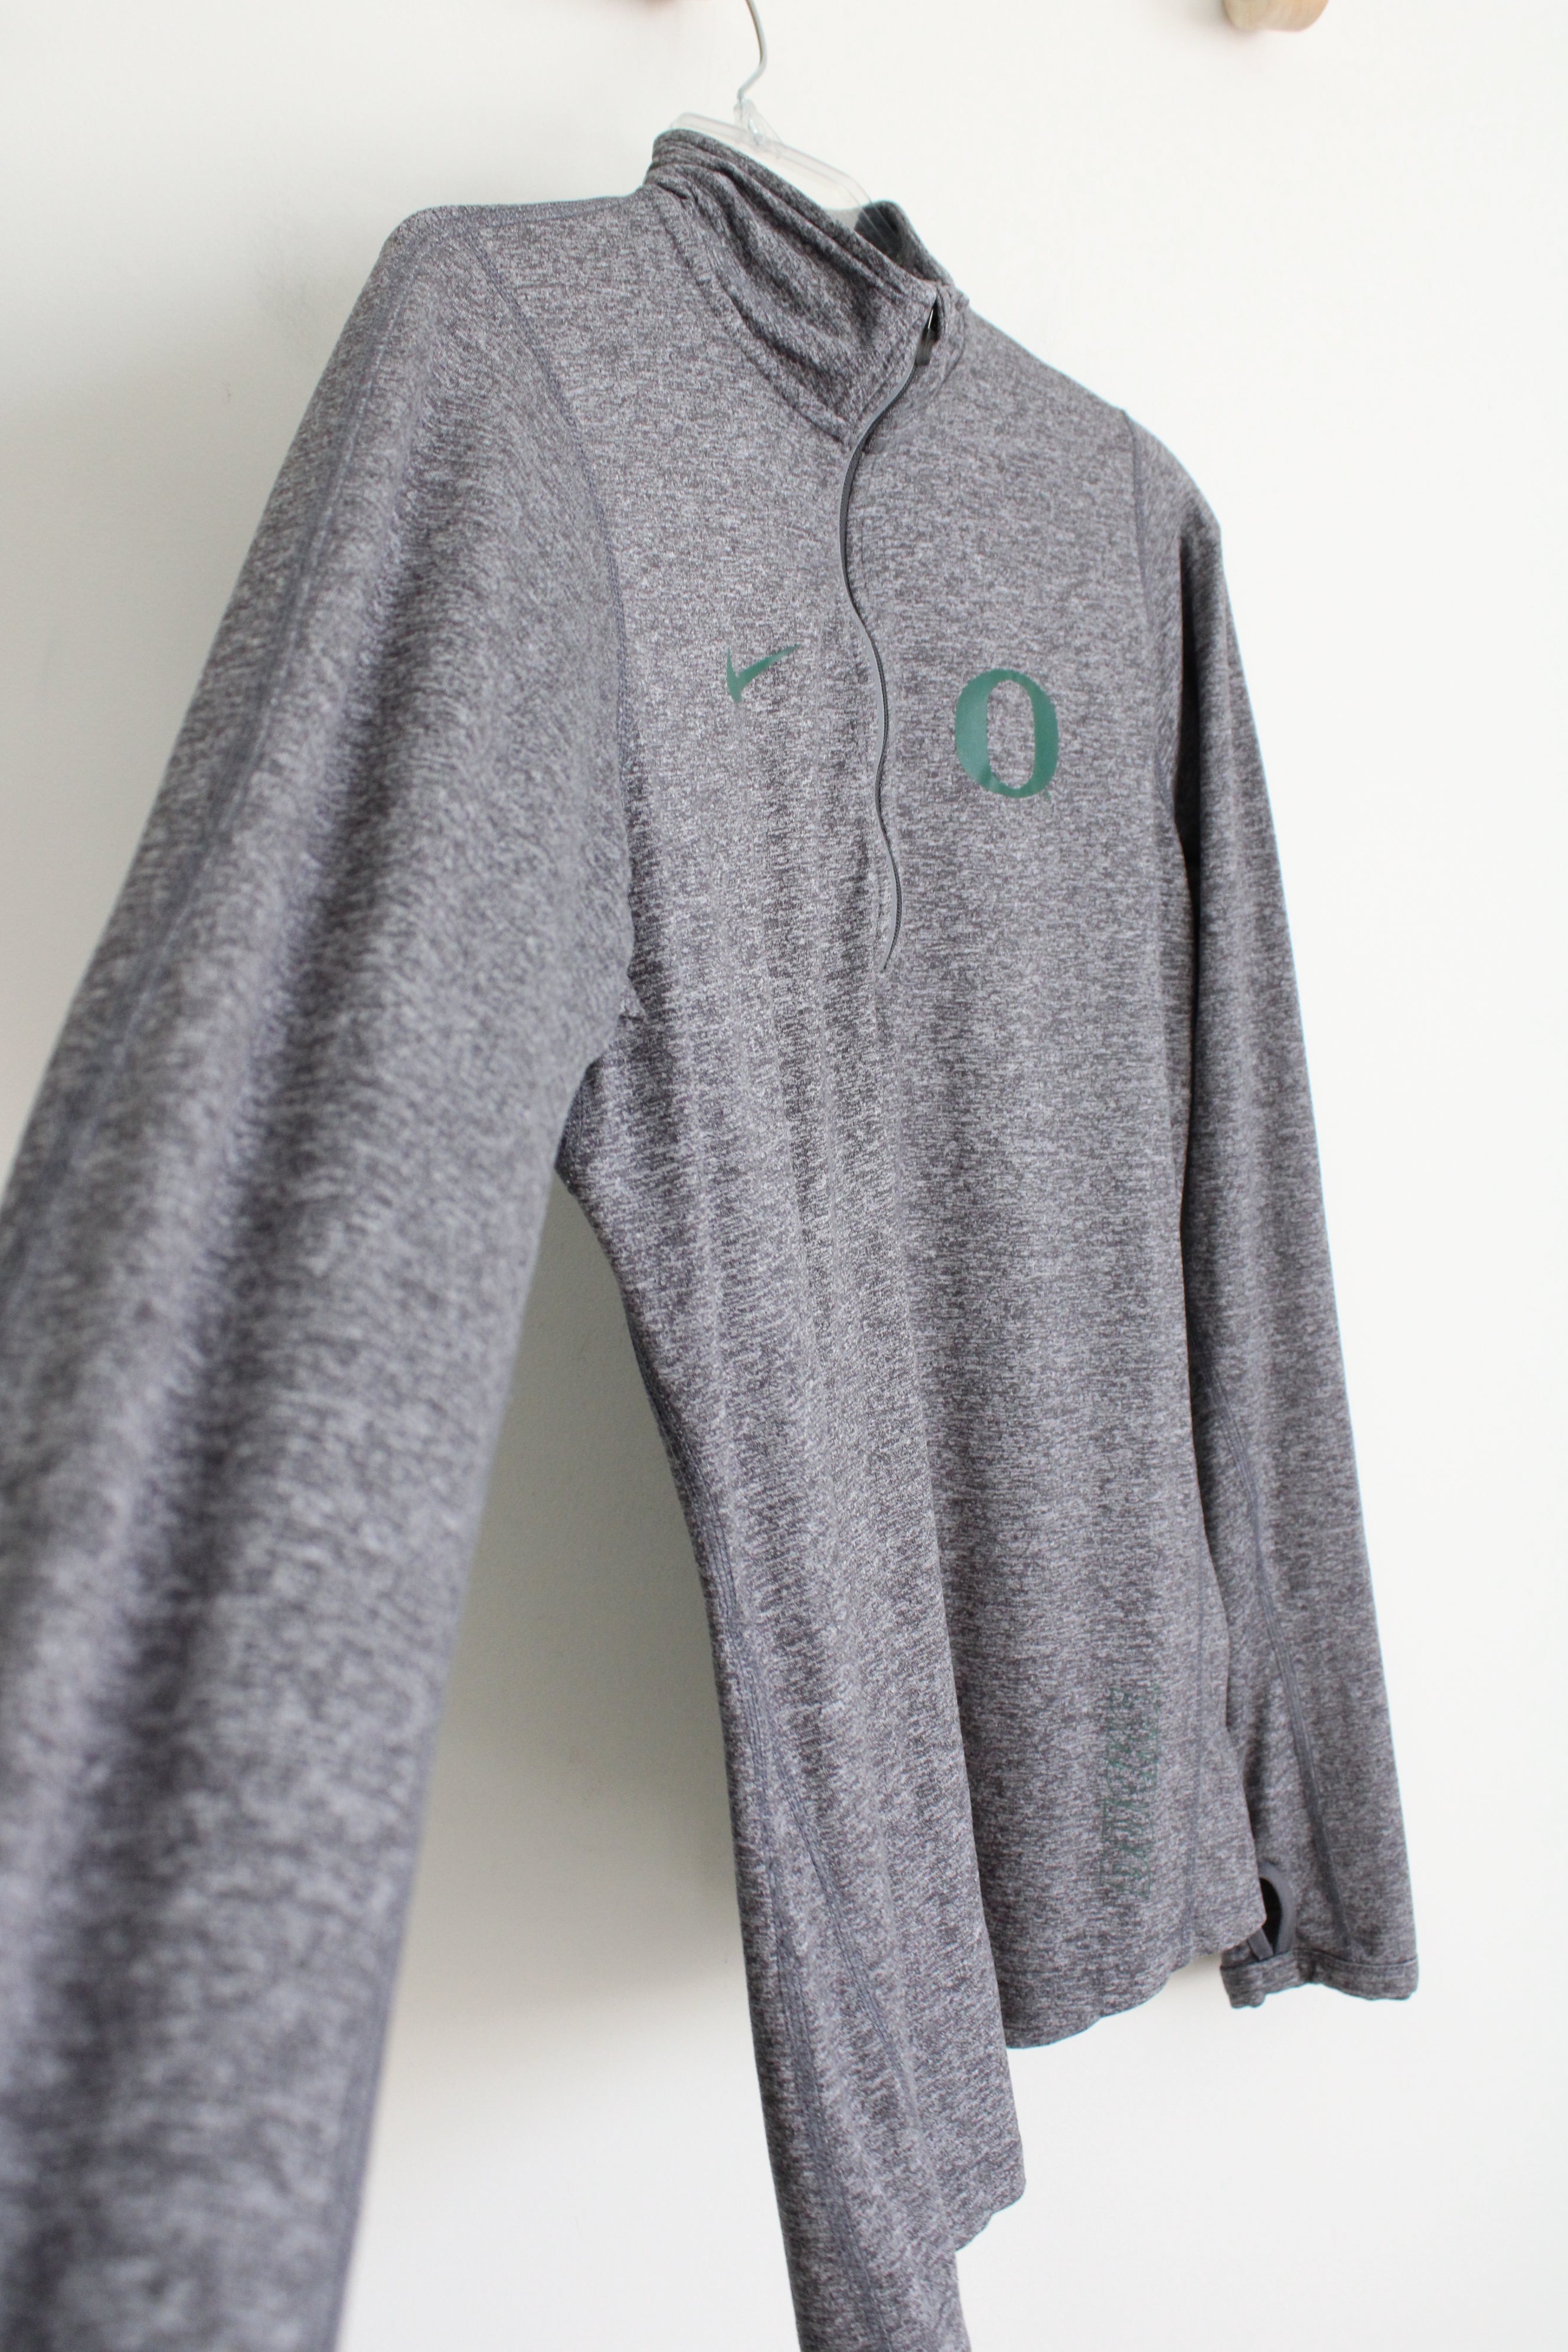 Nike Dri-Fit Gray Pullover 1/4" Zip Oregon Ducks Sweatshirt | M